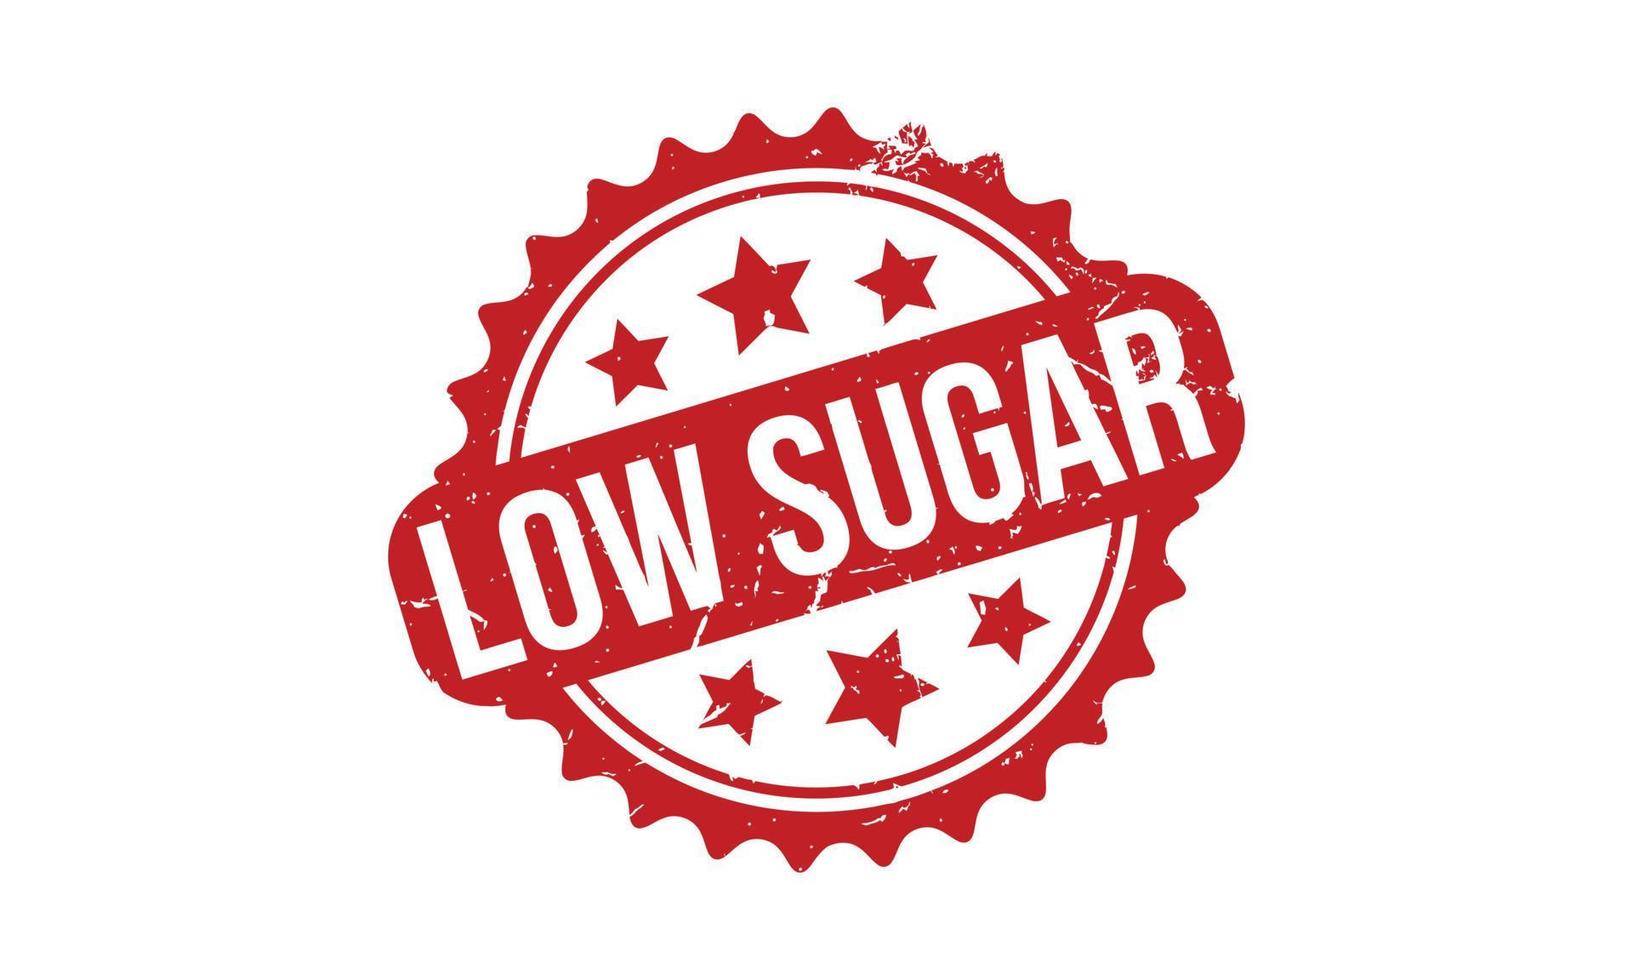 Low Sugar Rubber Grunge Stamp Seal Vector Illustration